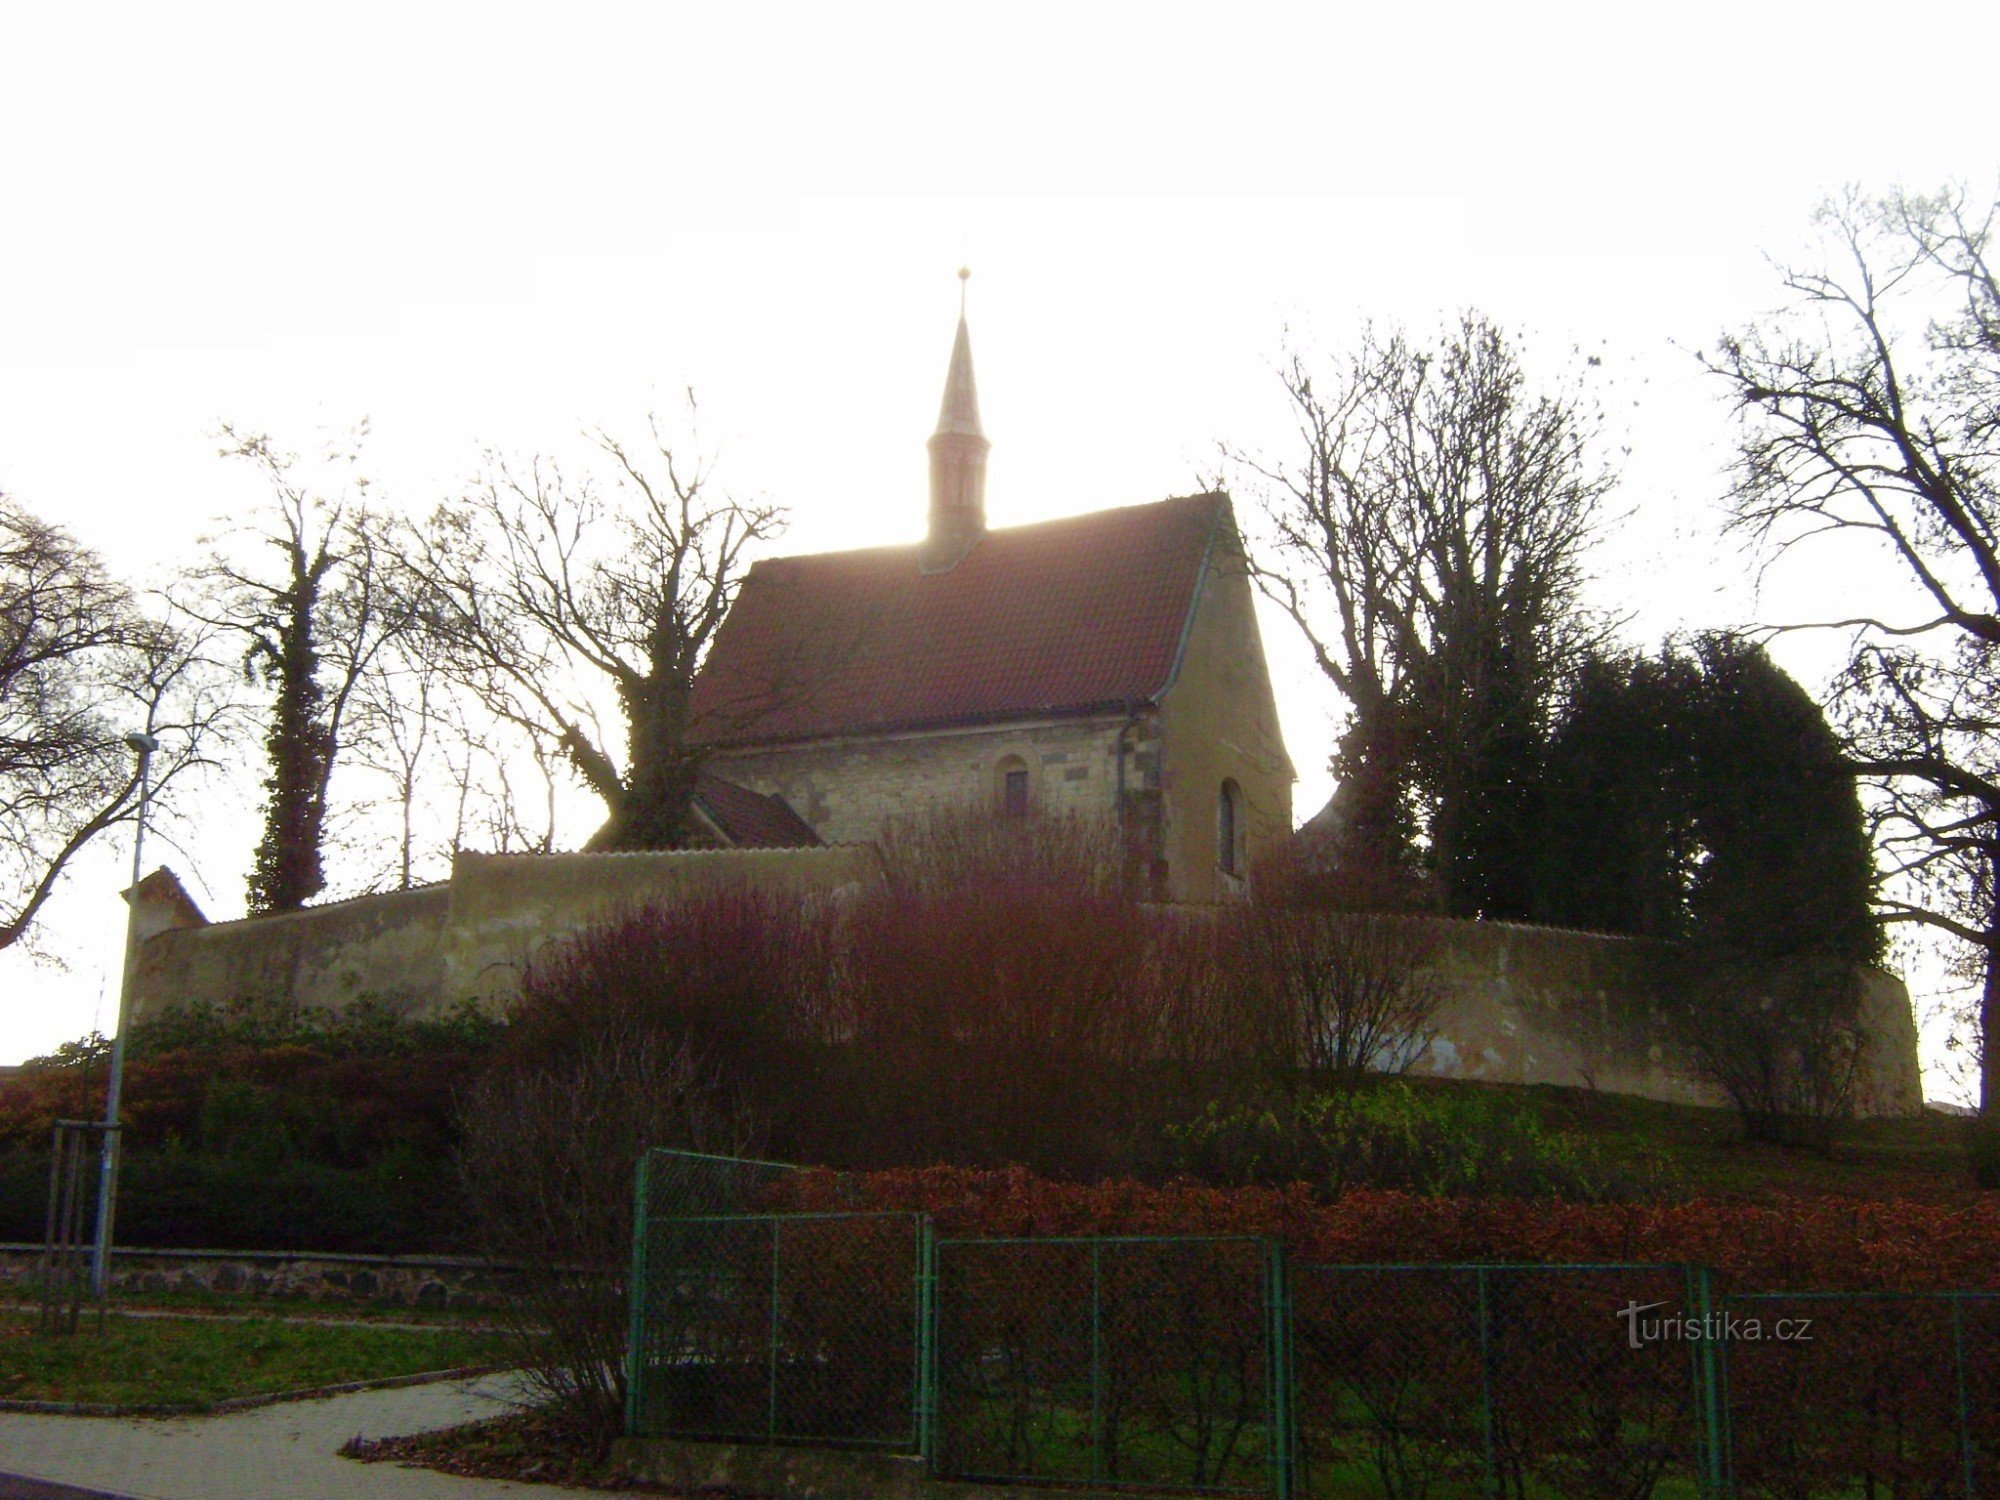 Dolní Chabry - Église de St. Jean le Baptiste